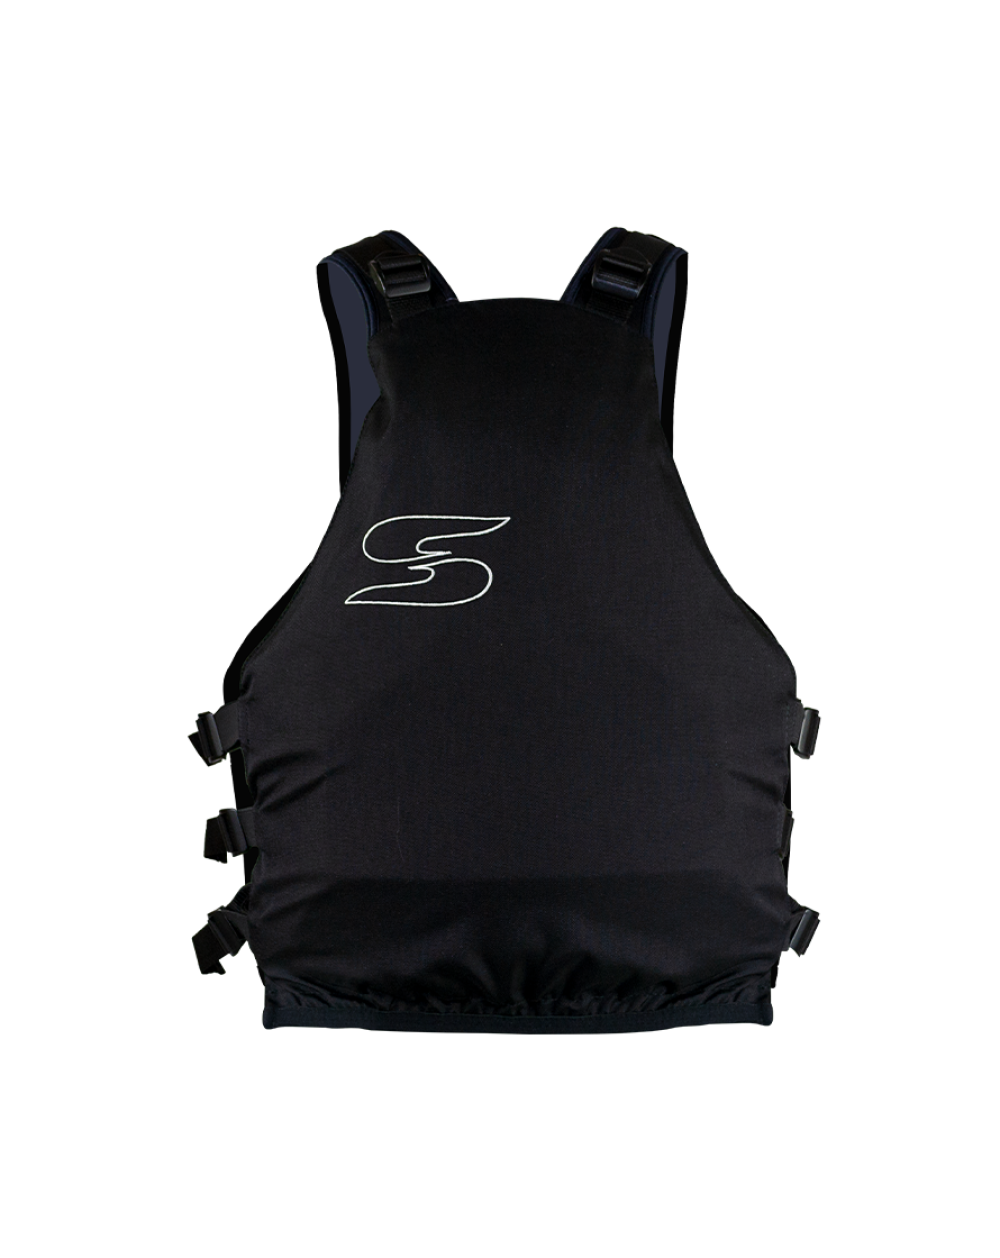 SANDILINE Schwimmweste PFD Pro Life Jacket - XL/2XL